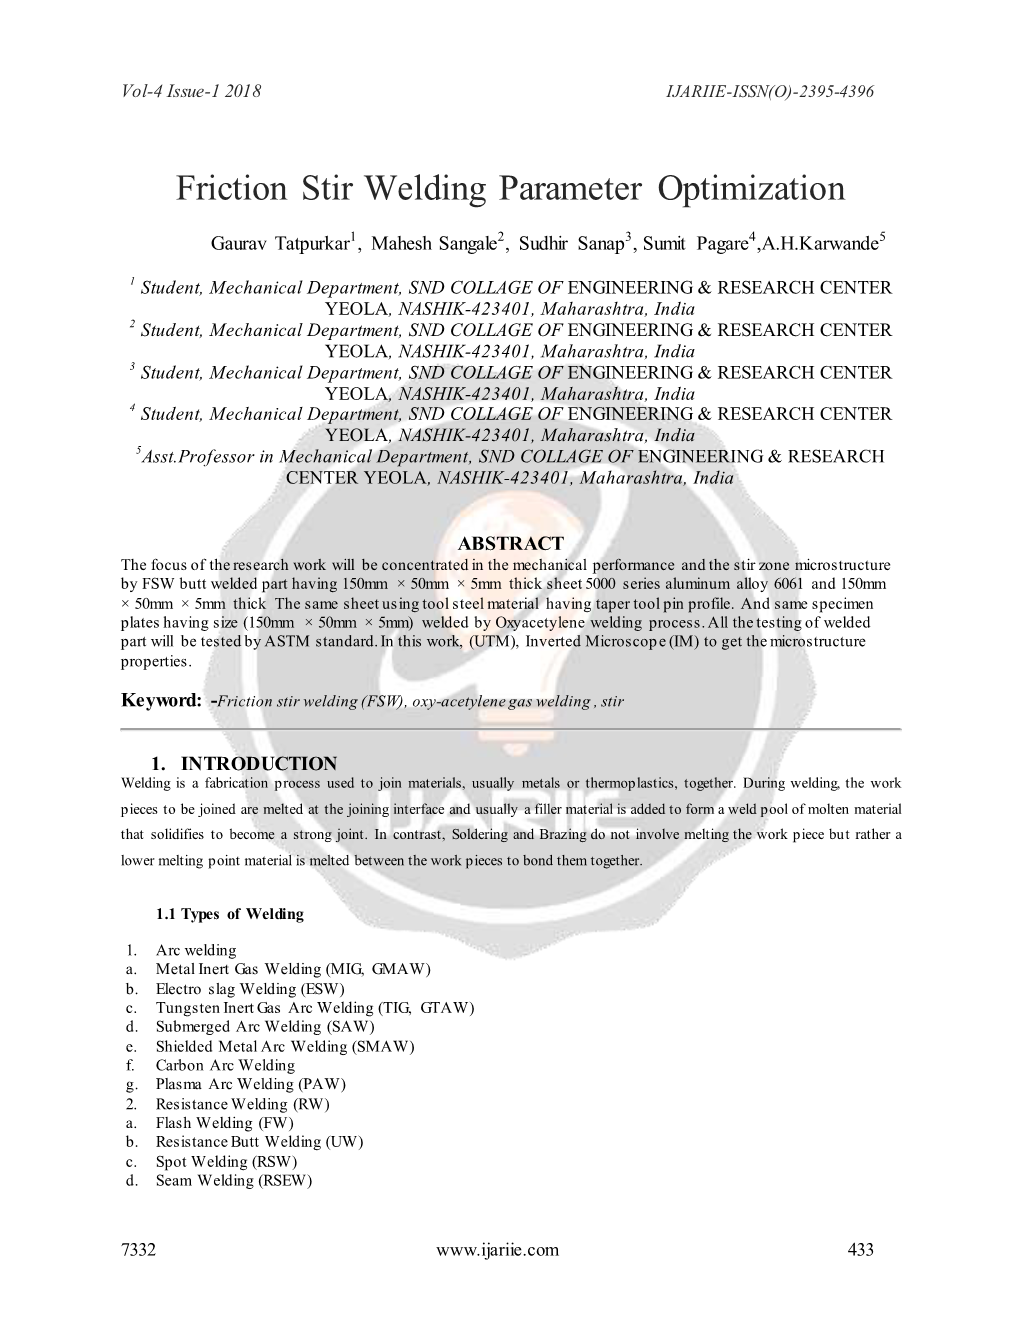 Friction Stir Welding Parameter Optimization